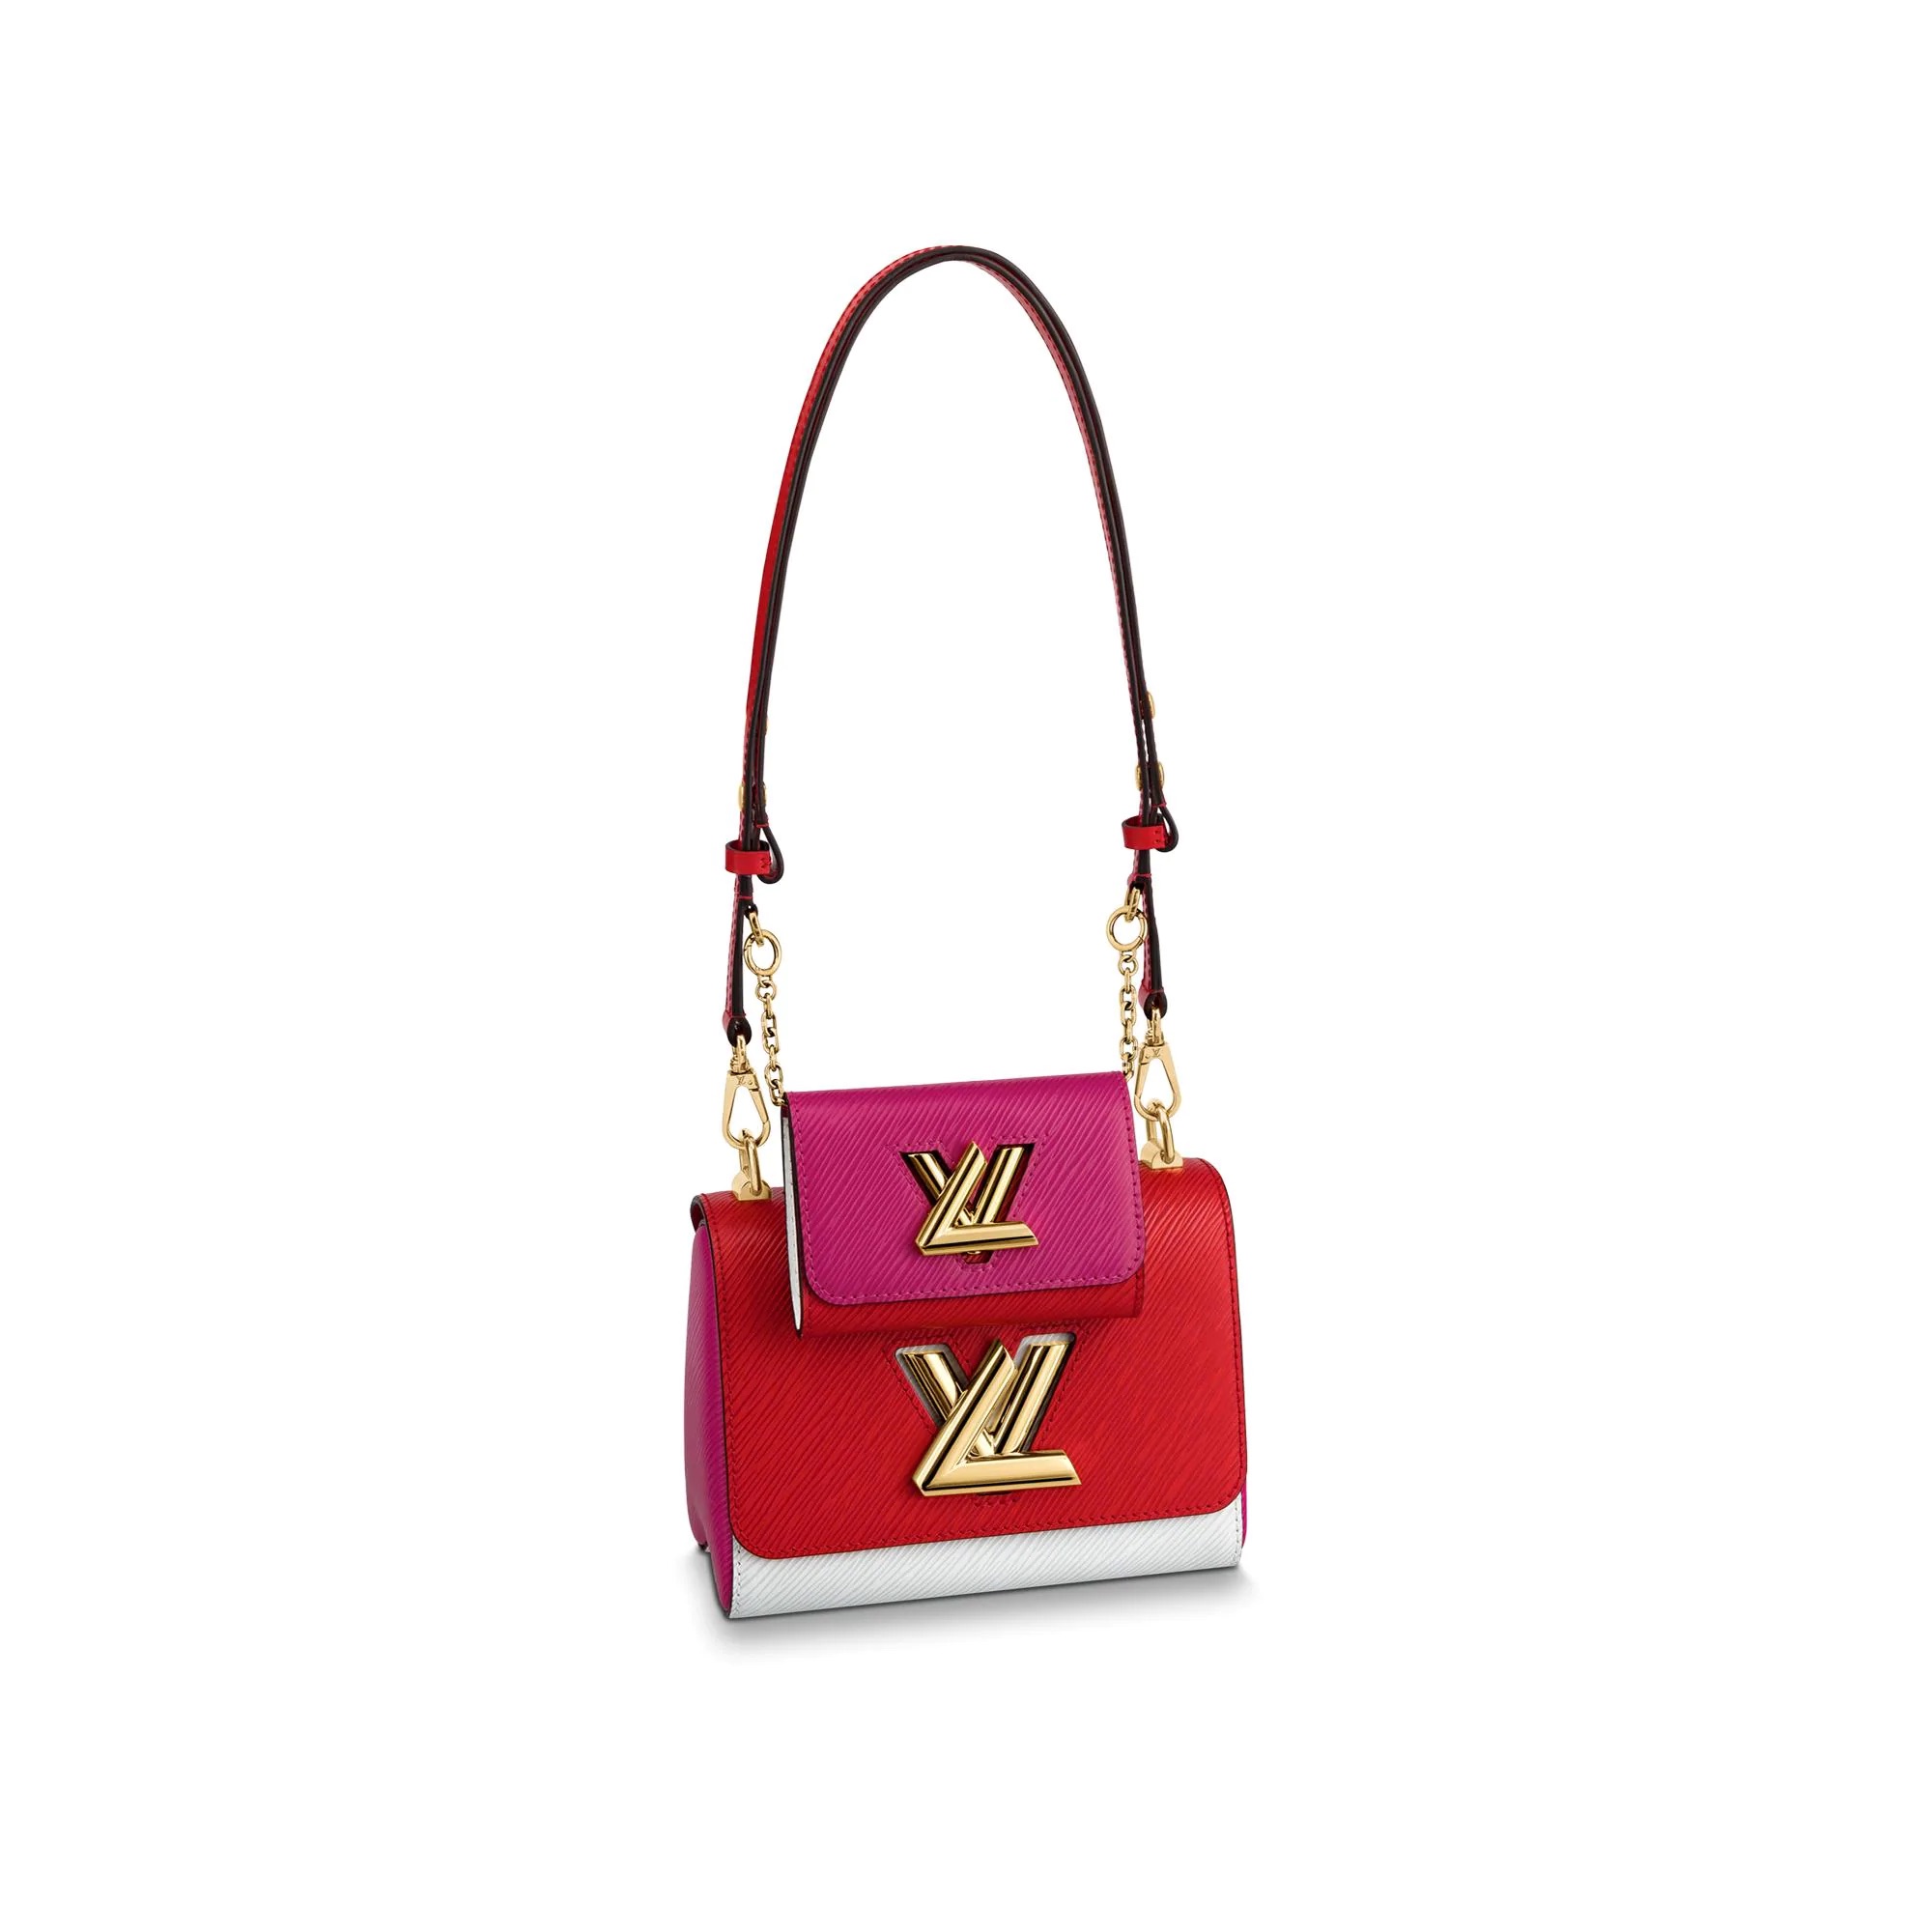 Kaia Gerber Fronts Louis Vuitton SS 2020 'Twist' Handbags Campaign — Anne  of Carversville